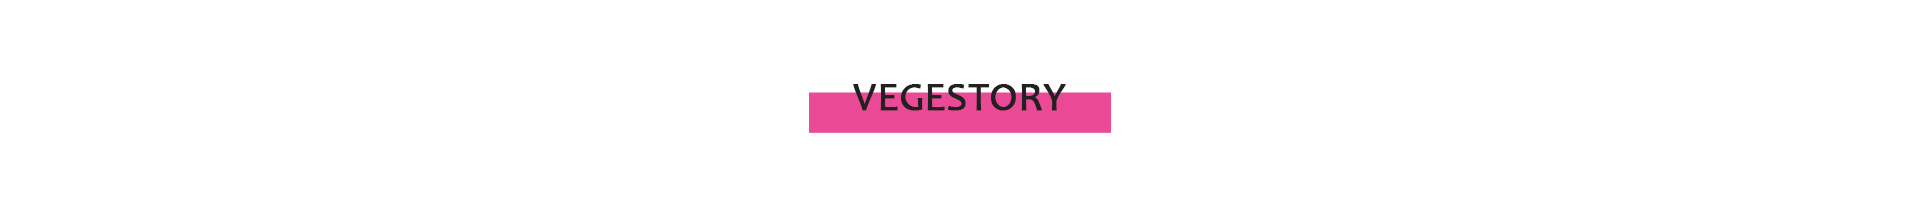 Vegestory image